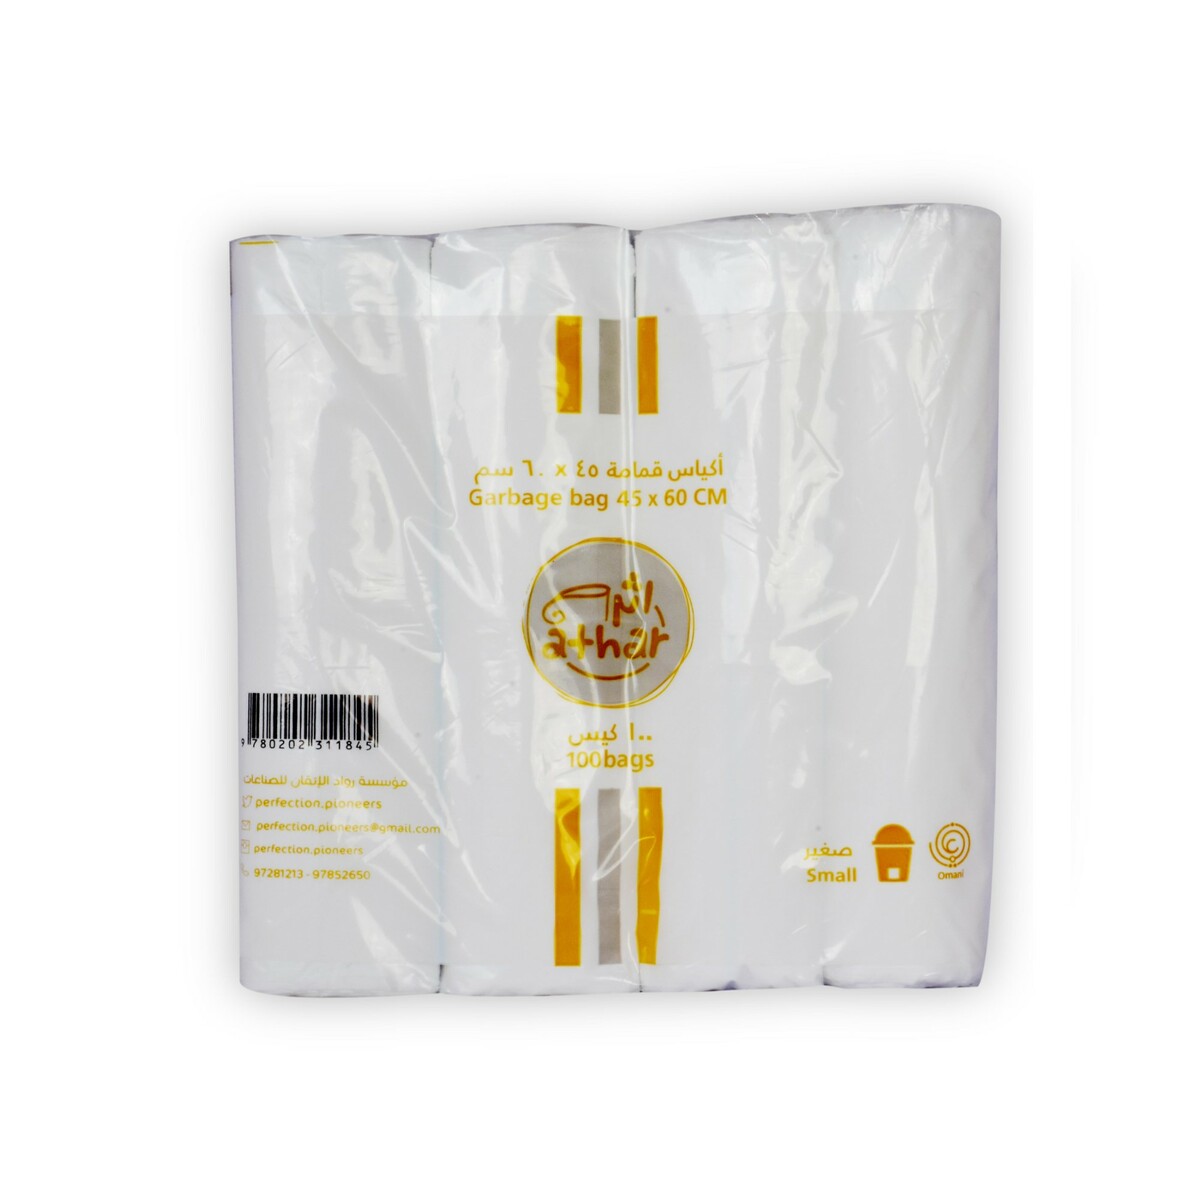 Athar Garbage Bag White Size 45x60cm 100pcs